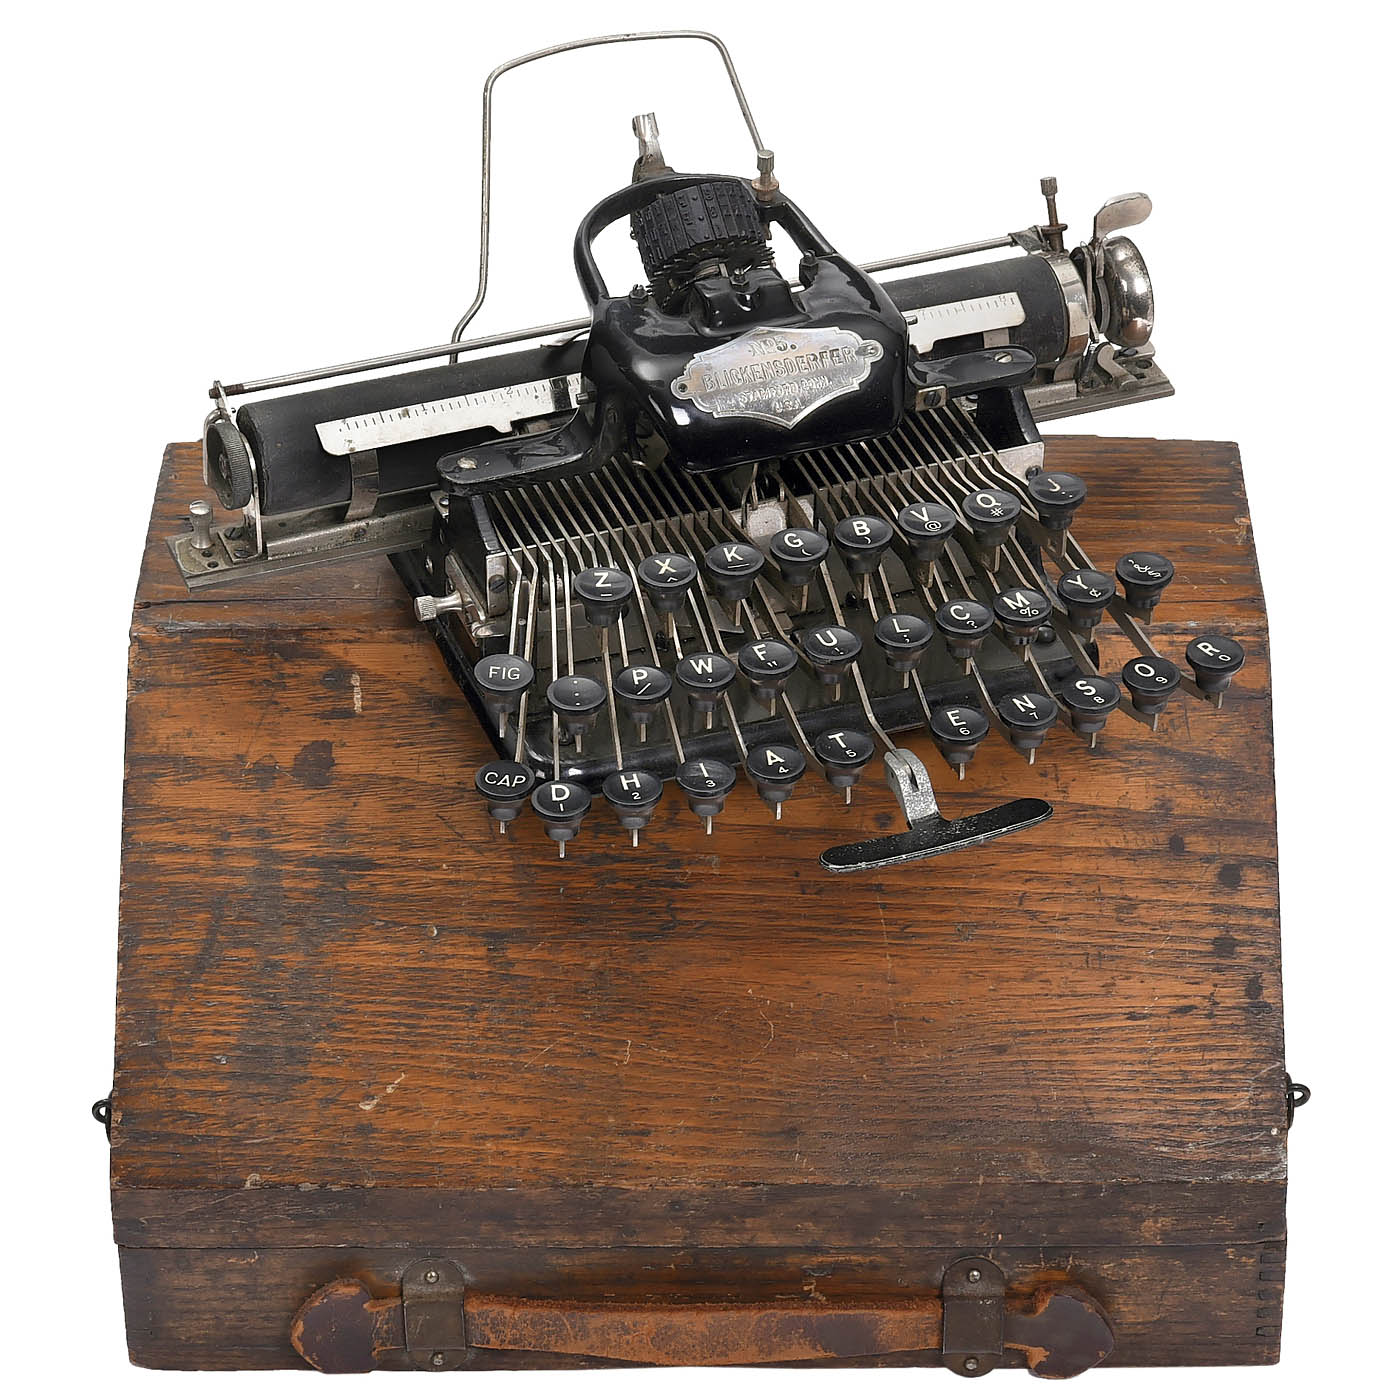 2 Blickensderfer Typewriters - Image 2 of 3